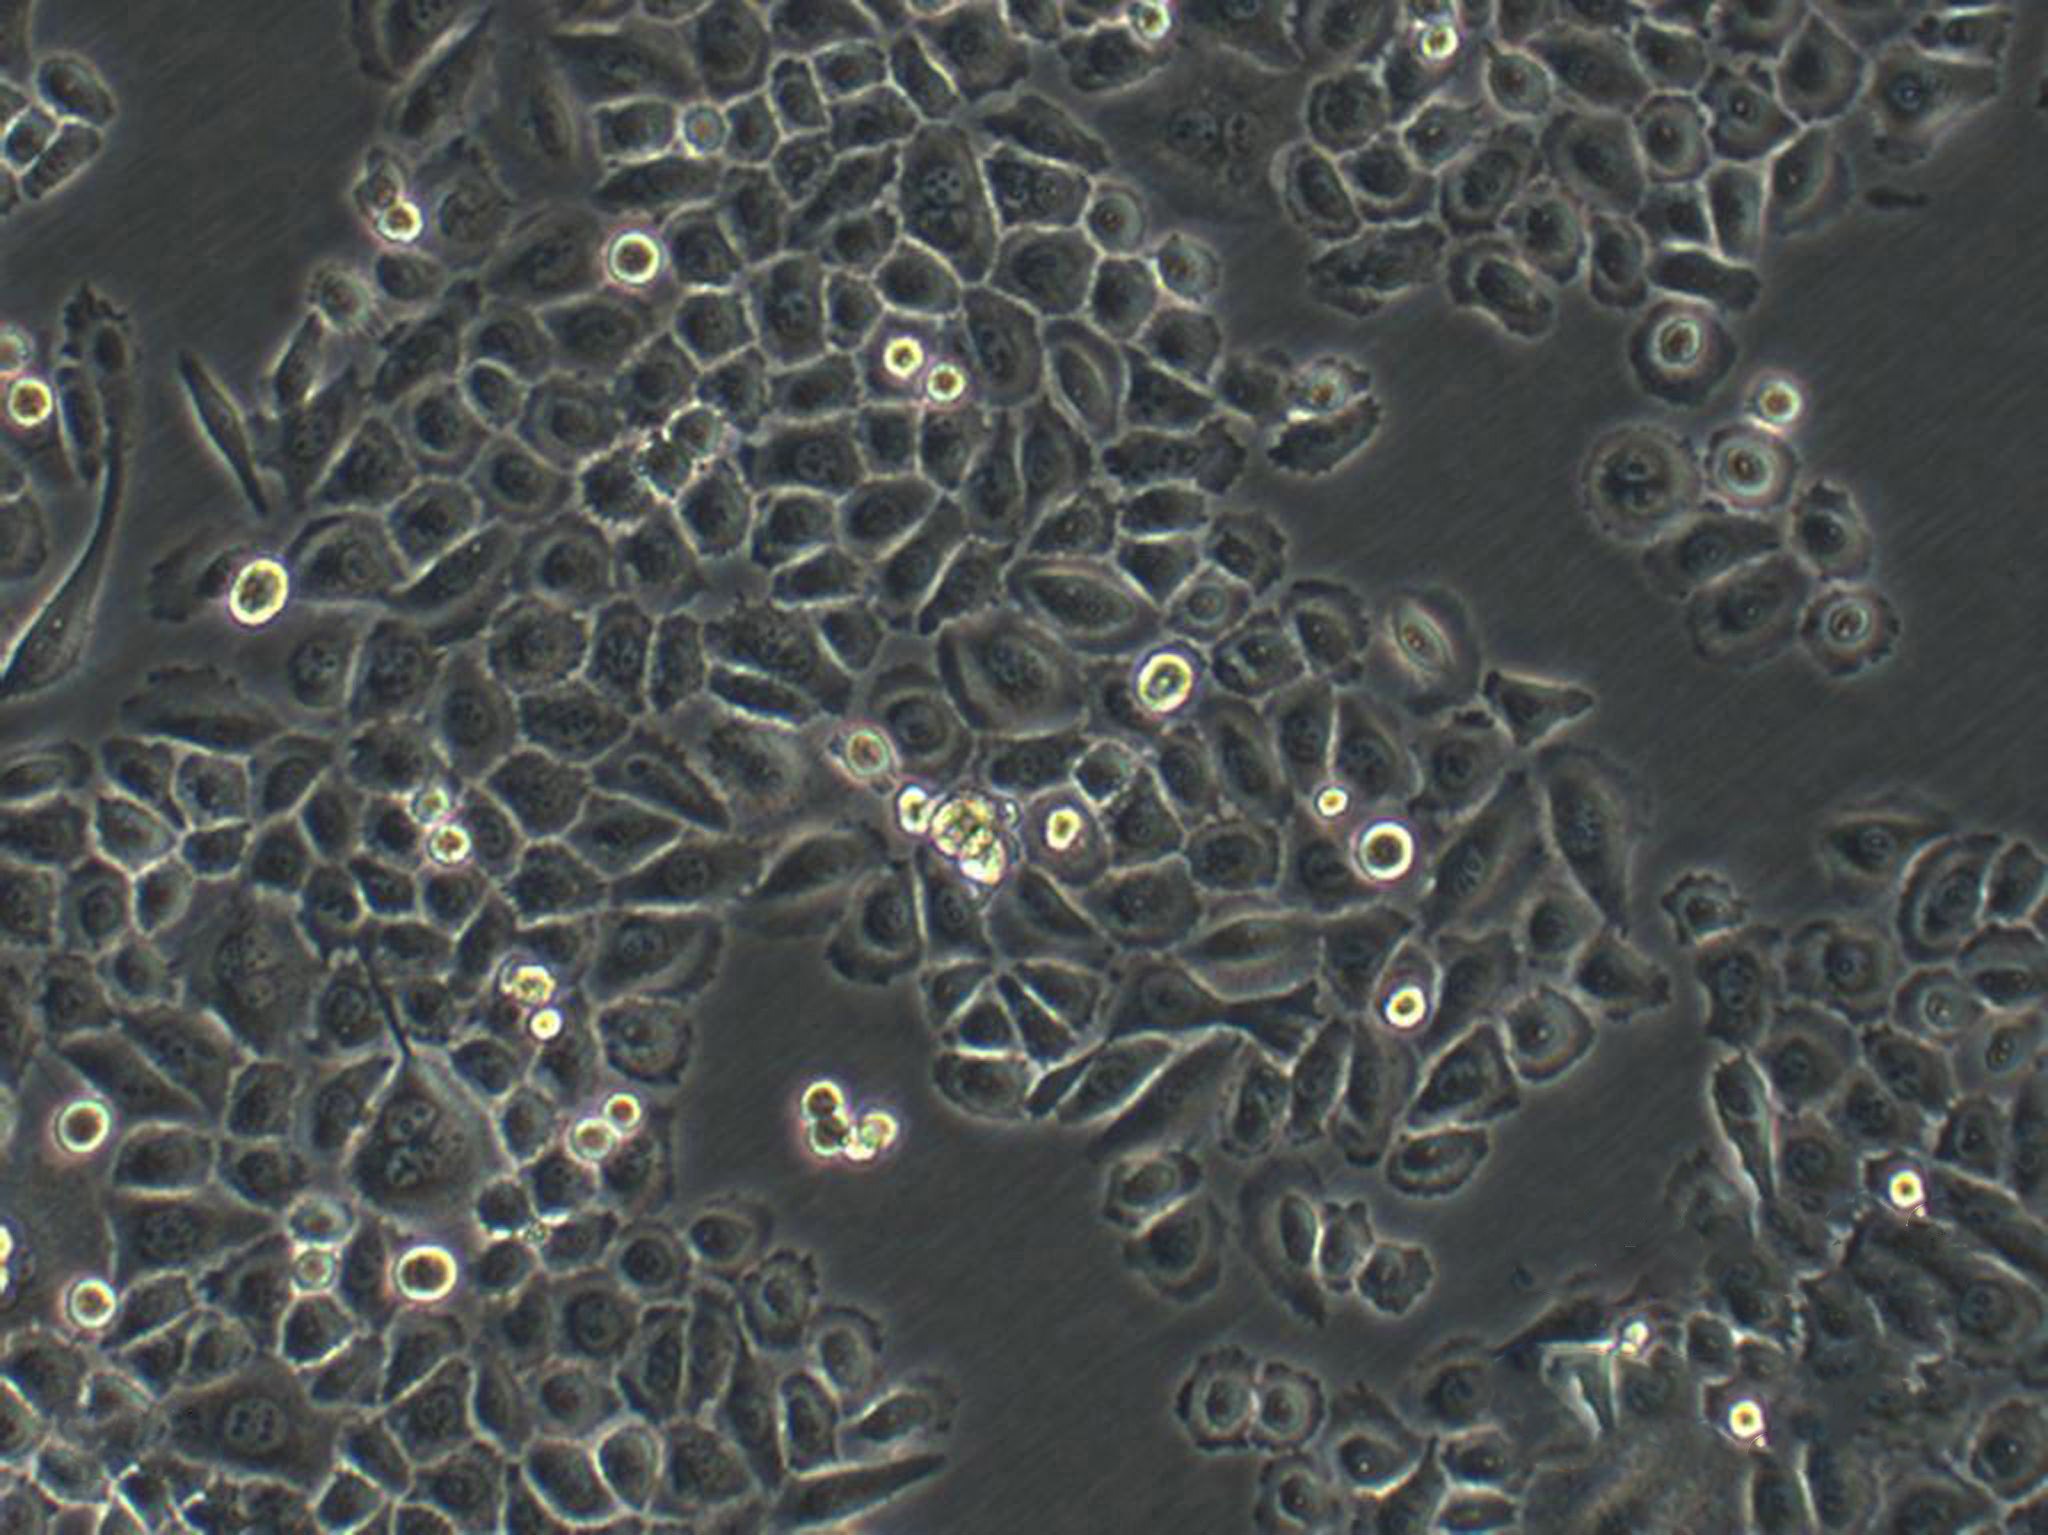 SW579 Cells|人甲状腺鳞癌需消化细胞系,SW579 Cells